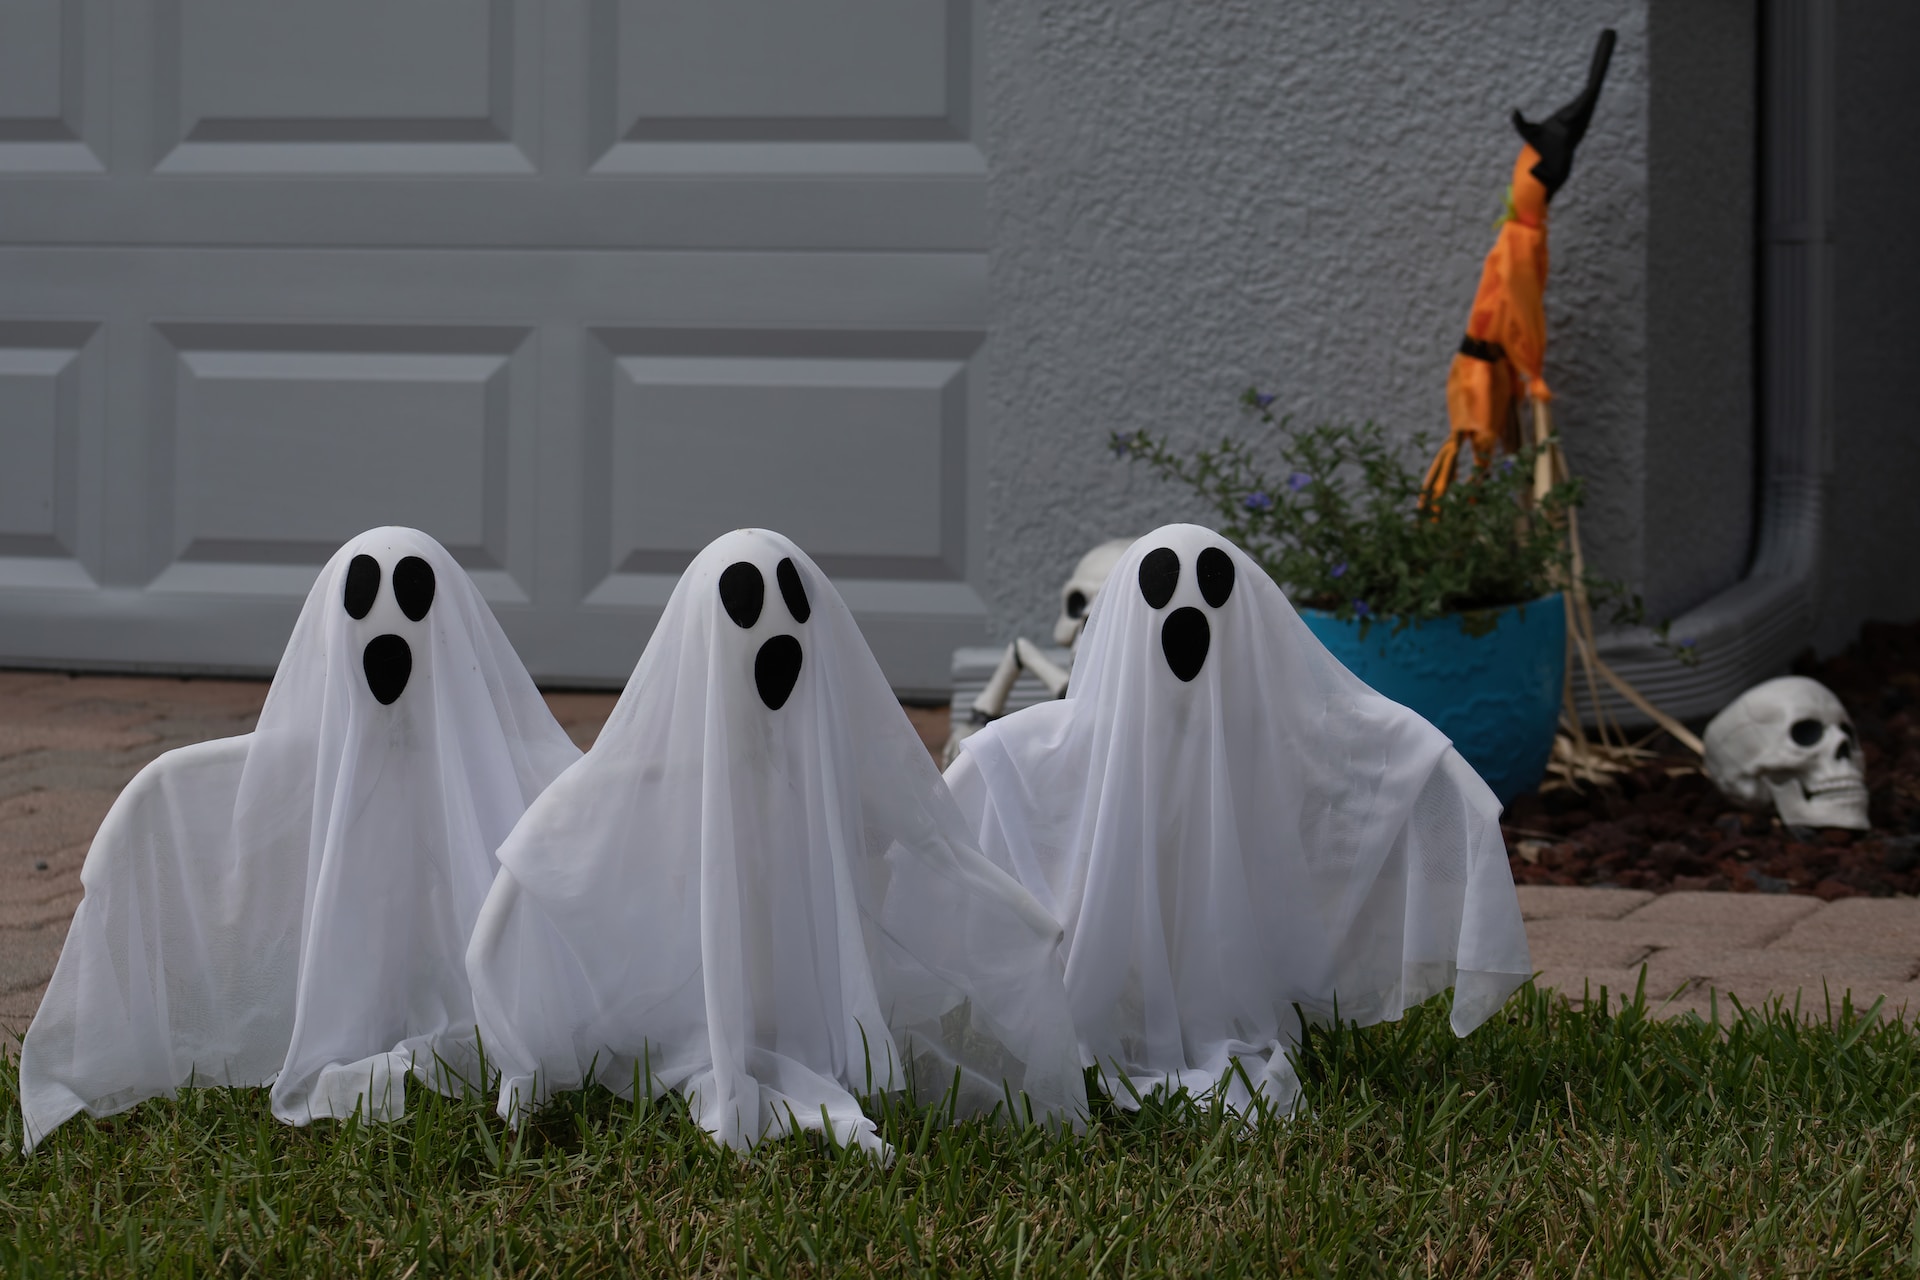 3 Halloween ghost ornaments in a garden